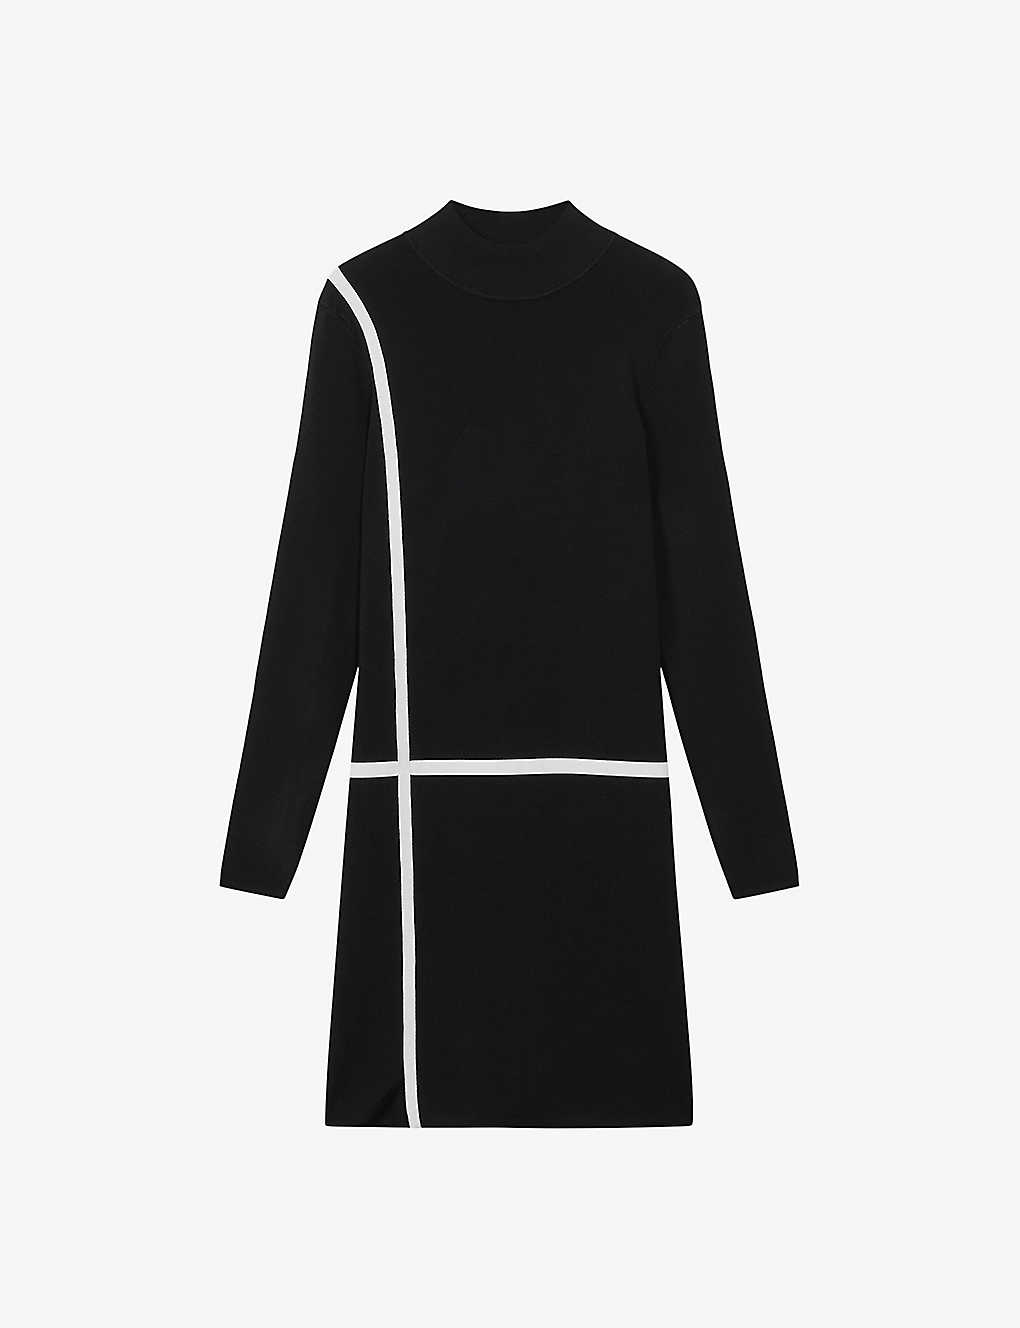 Reiss Annie - Black/ivory Knitted Bodycon Mini Dress, S